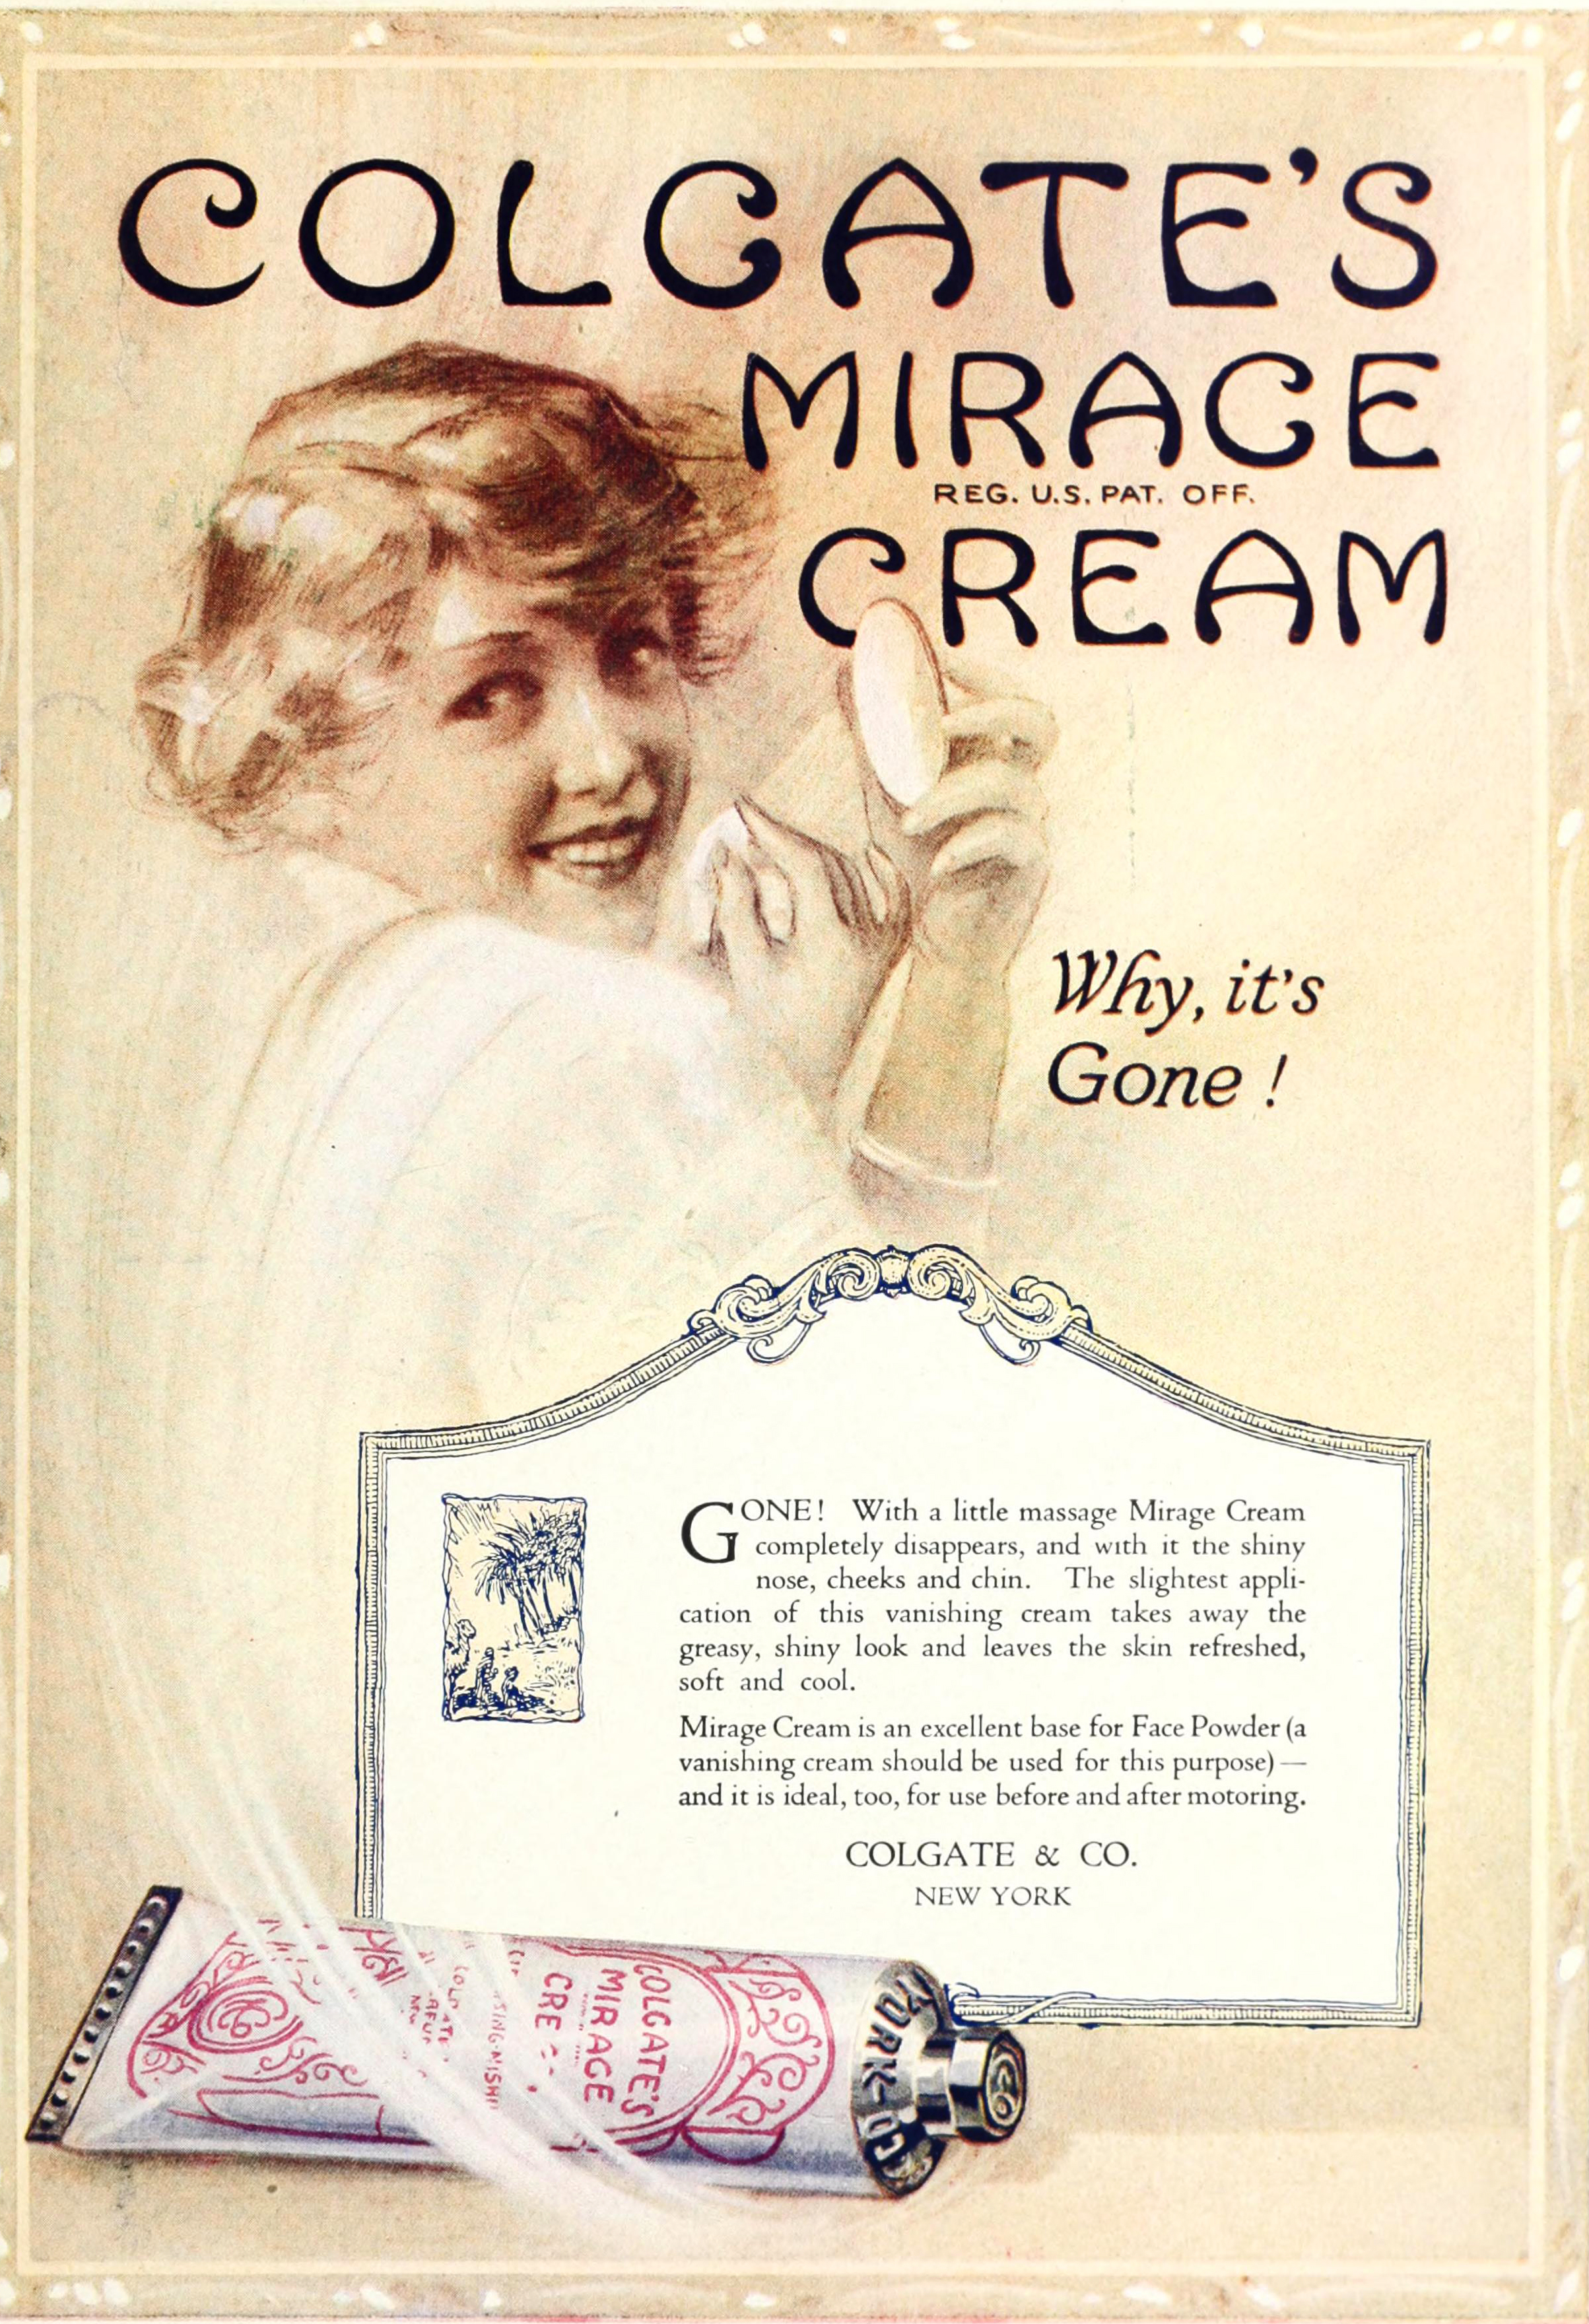 Colgate's Mirage Cream Facial Cream Ad Circa 1920